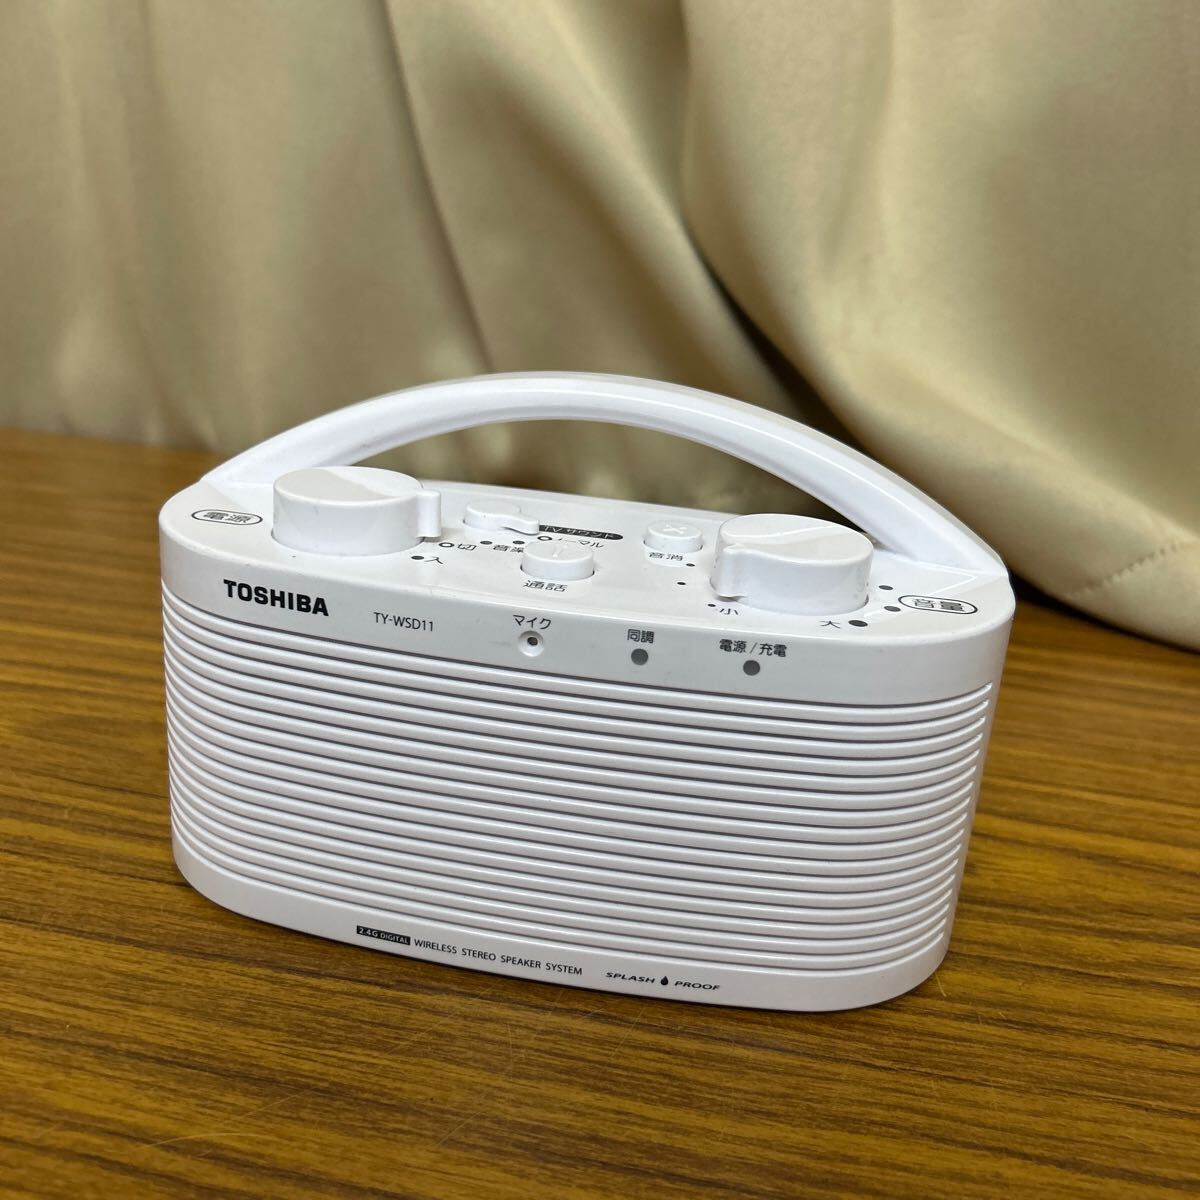  Toshiba wireless speaker TY-WSD11 secondhand goods /60 operation verification settled 